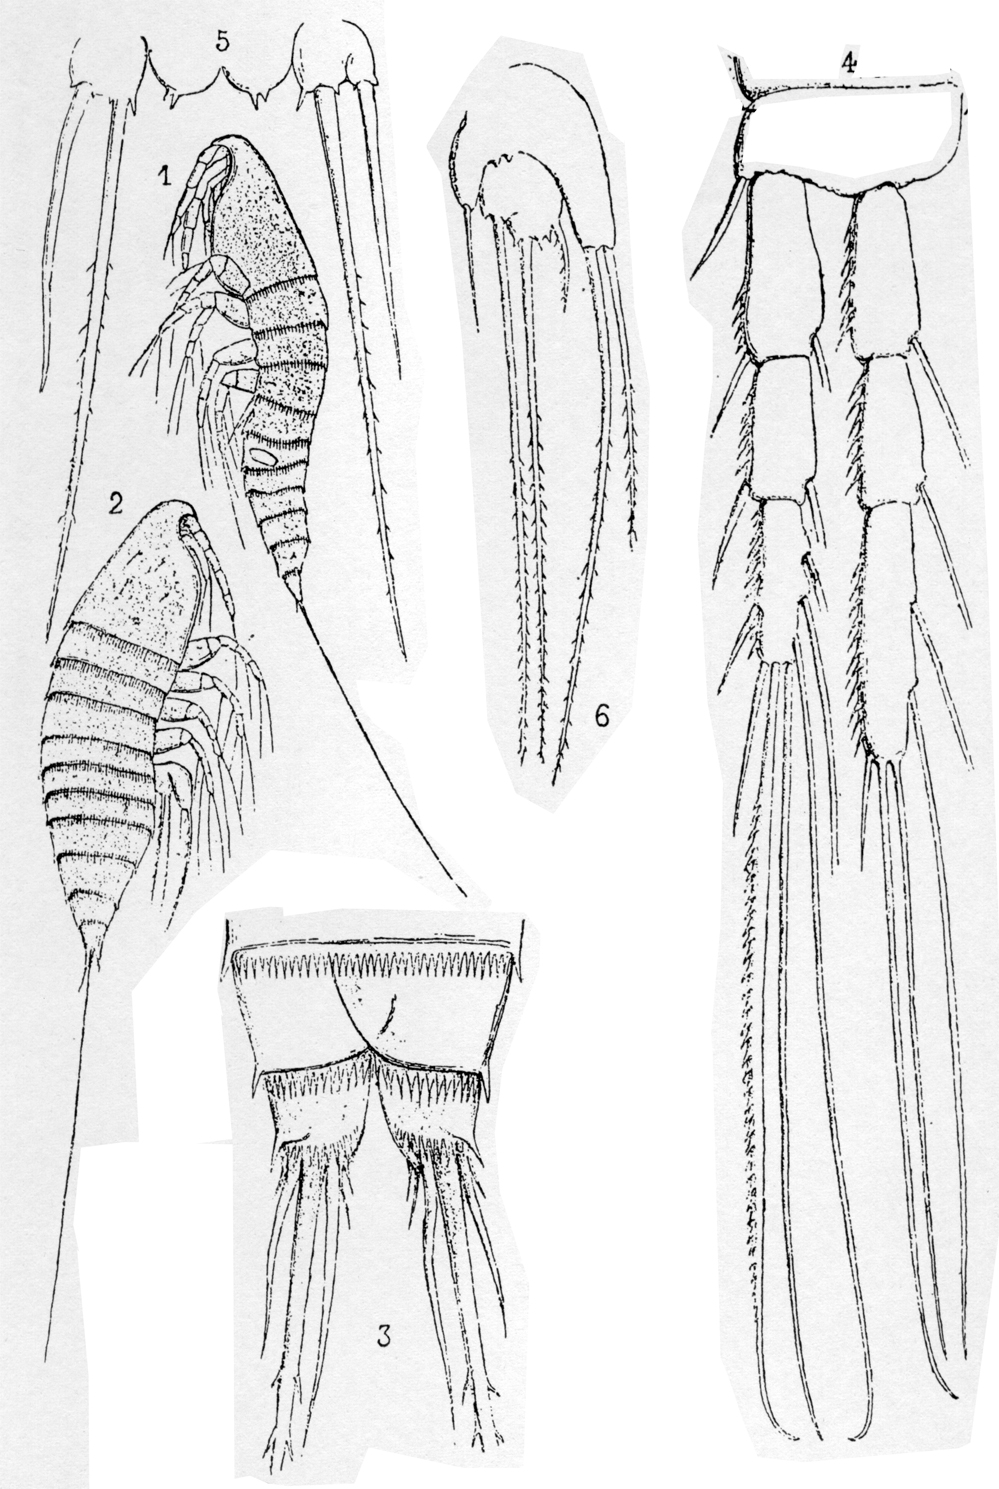 Species Microsetella norvegica - Plate 5 of morphological figures